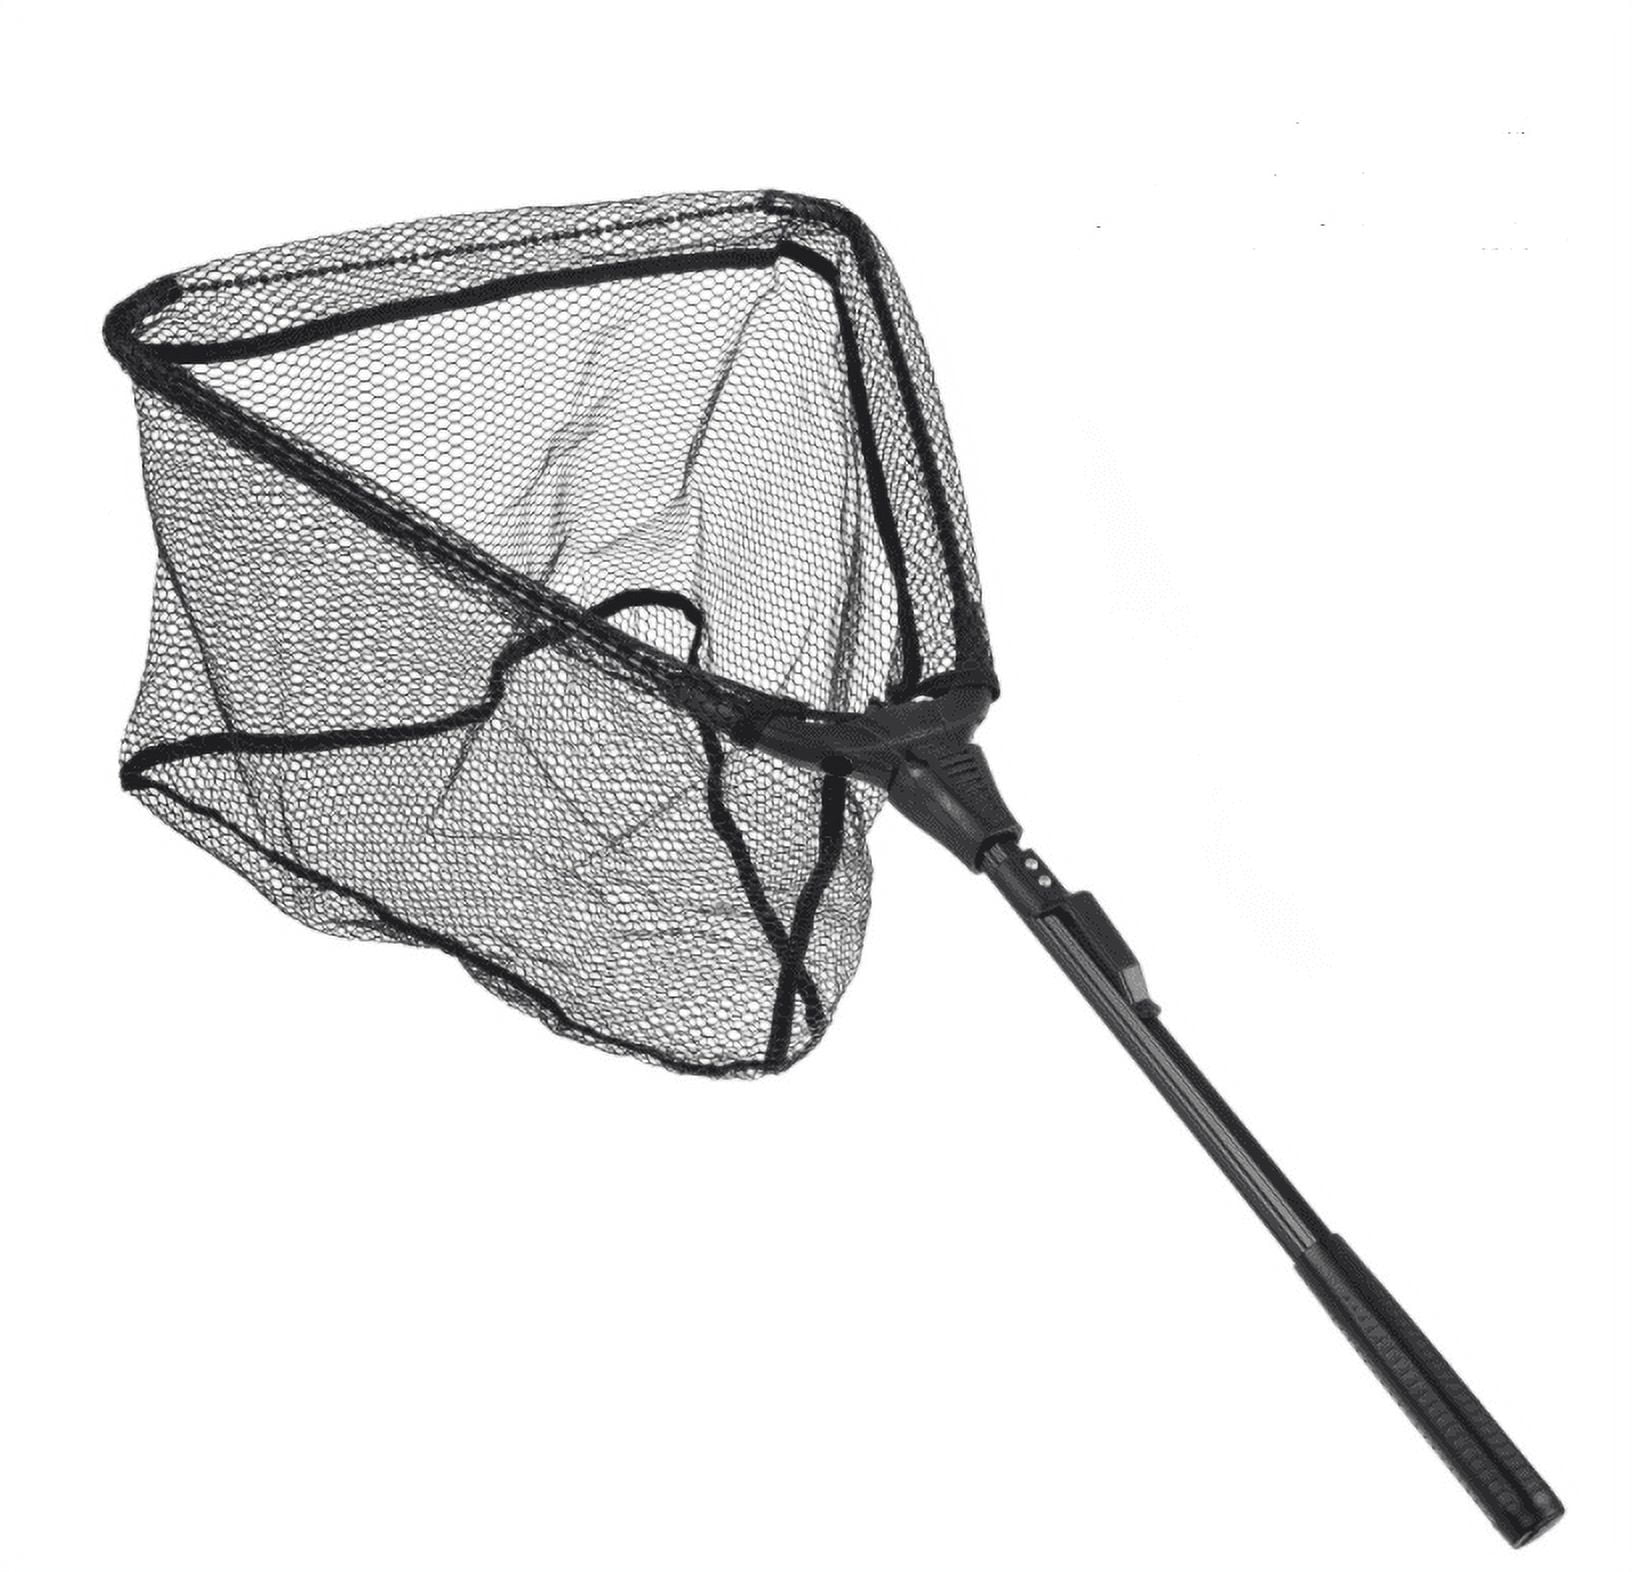 Foldable Fishing net for Steelhead,Salmon,Kayak, Catfish, Bass,Trout Fishing,Telescopic  Extending Fish Landing net and Durable Soft Mesh for Catching&Releasing 